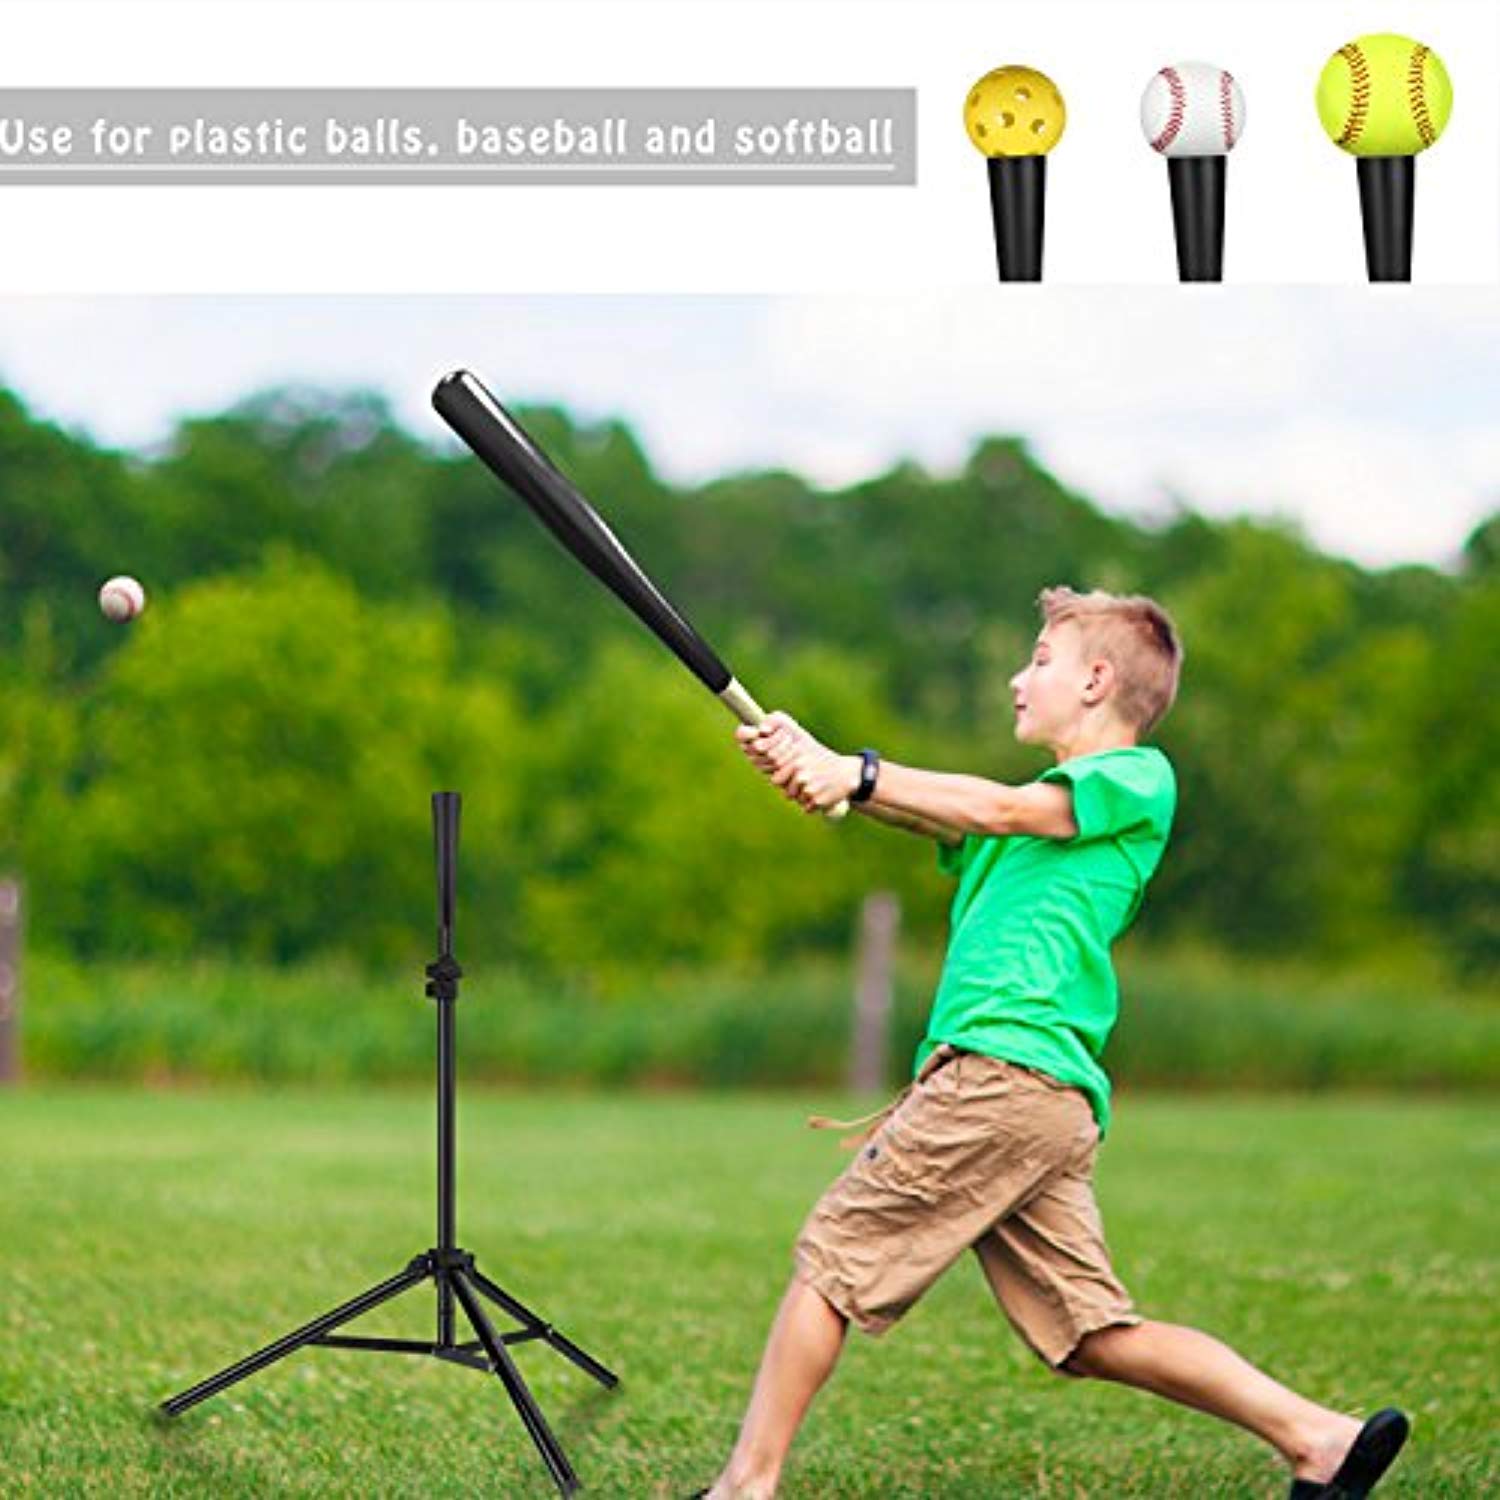 Portable tripod baseball batting Tee